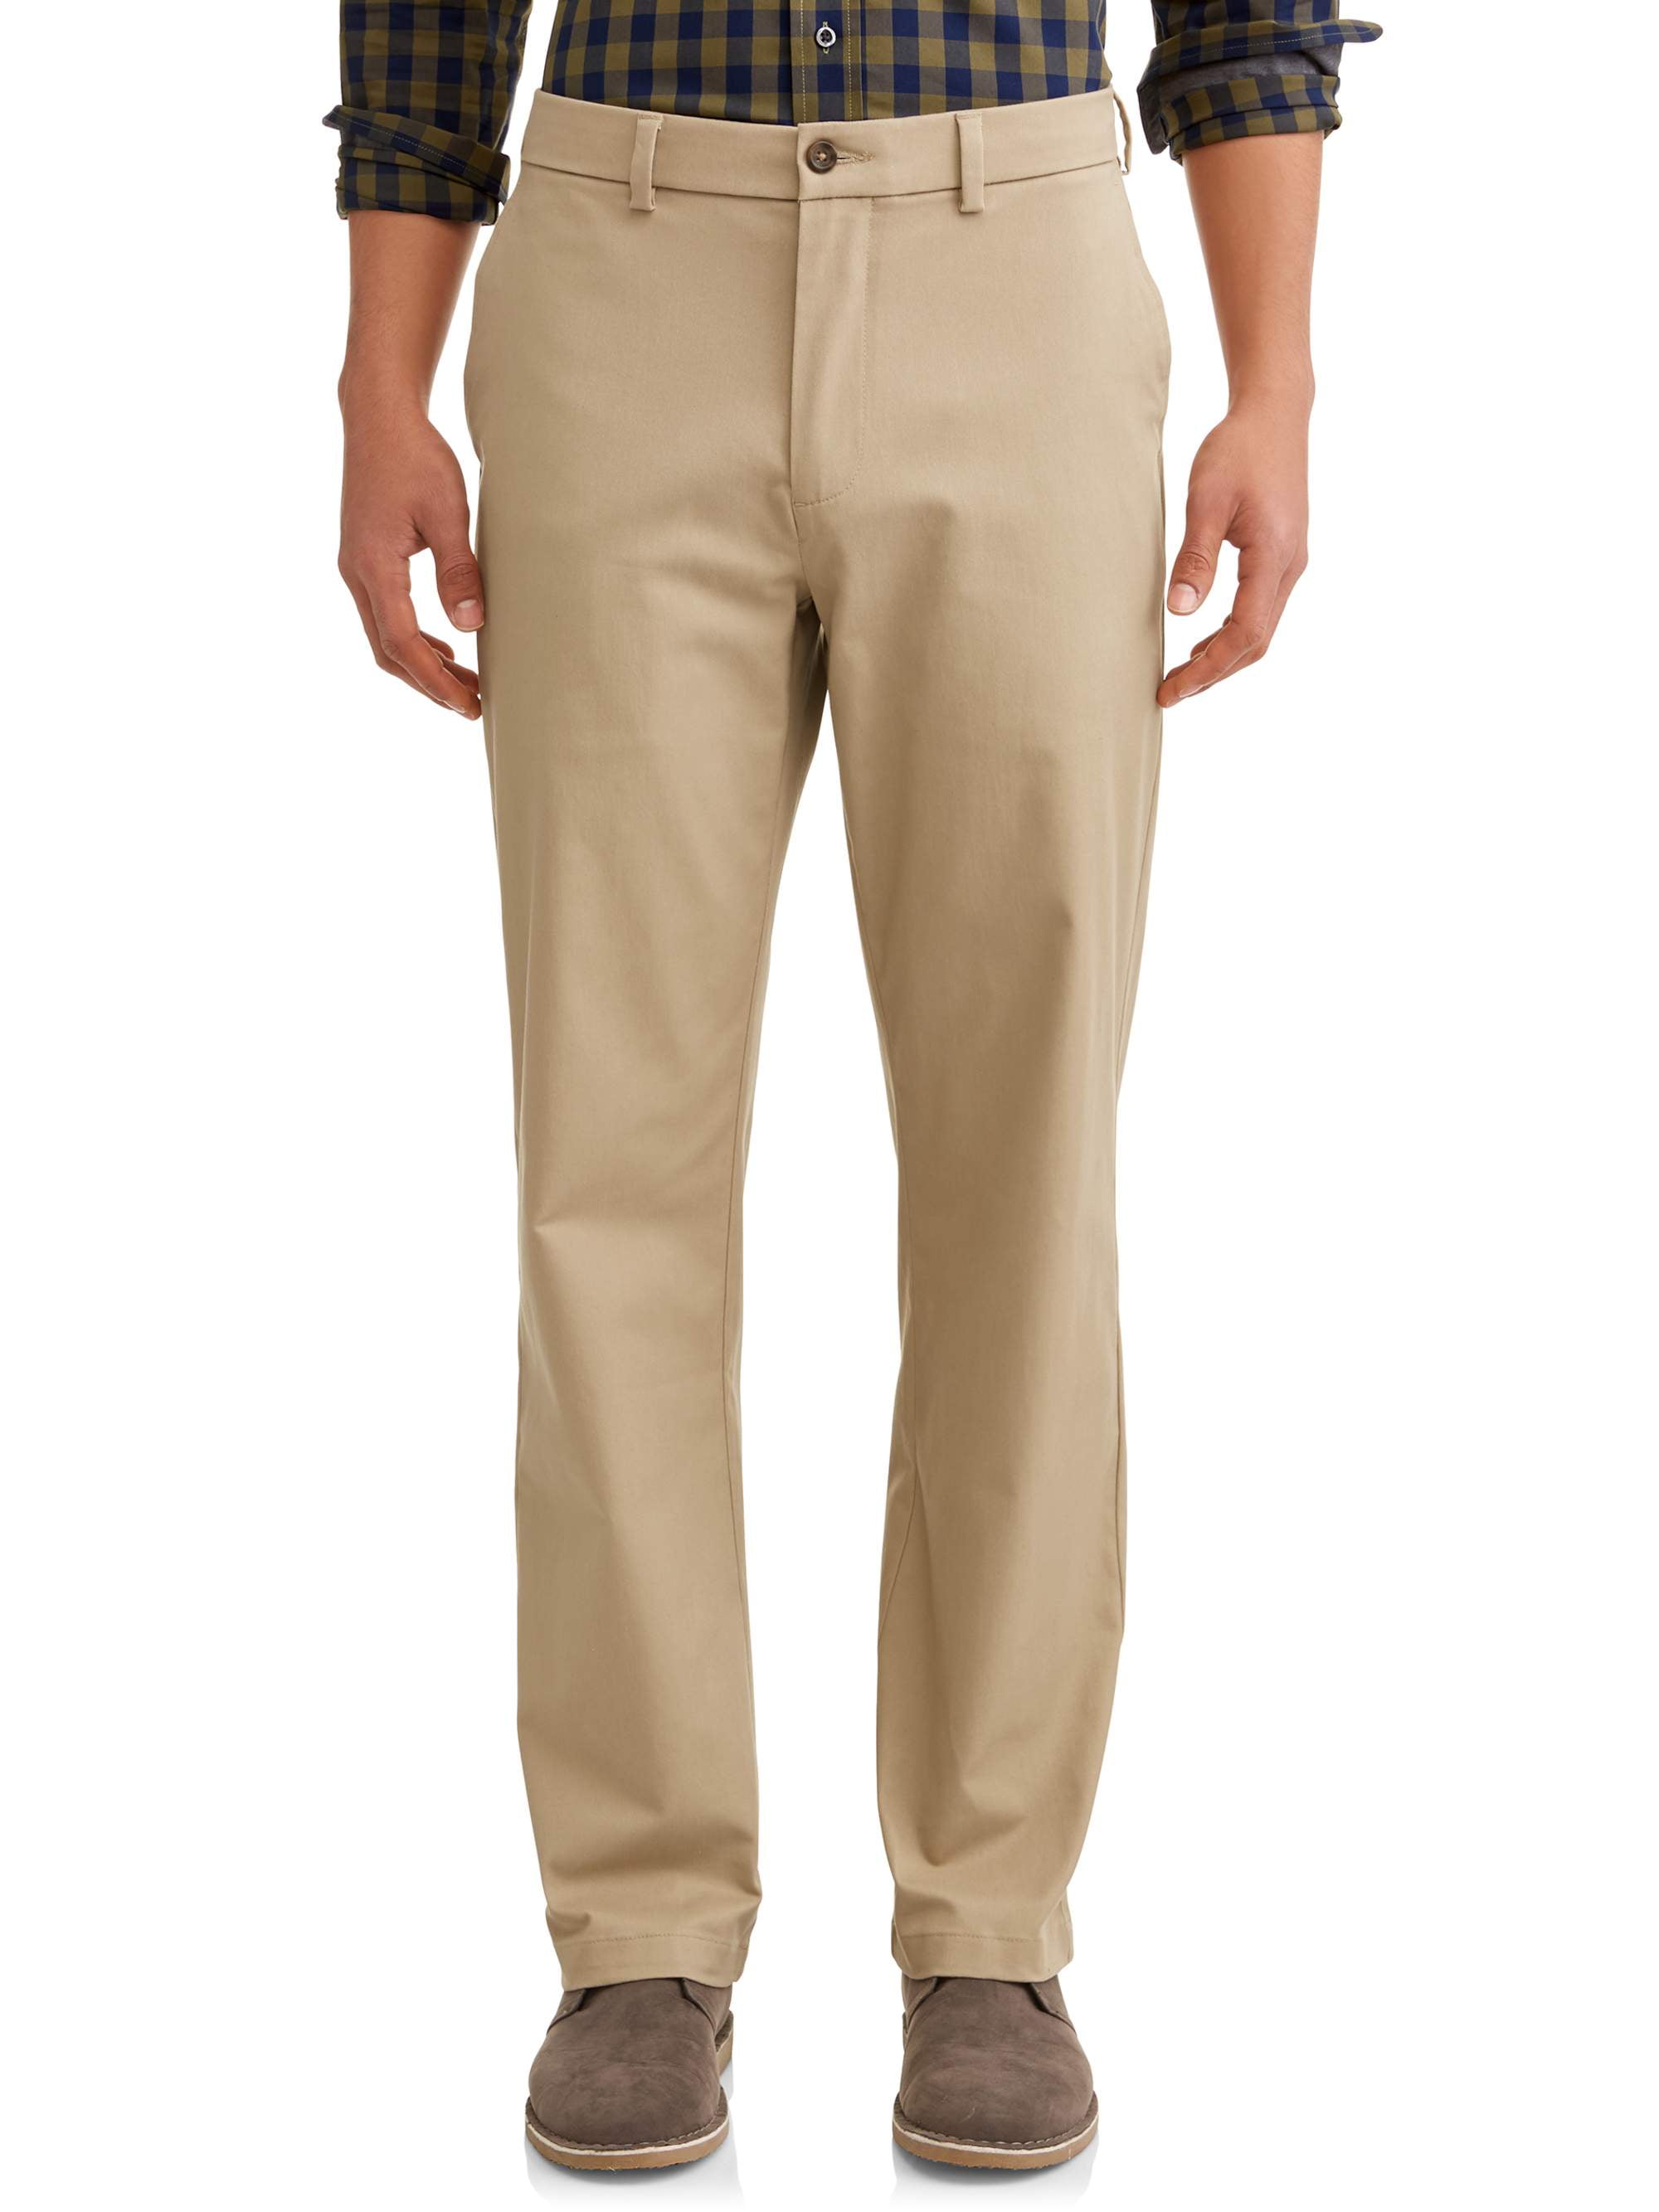 GEORGE - George Men's Premium Pleated Regular Fit Khaki Pant - Walmart.com